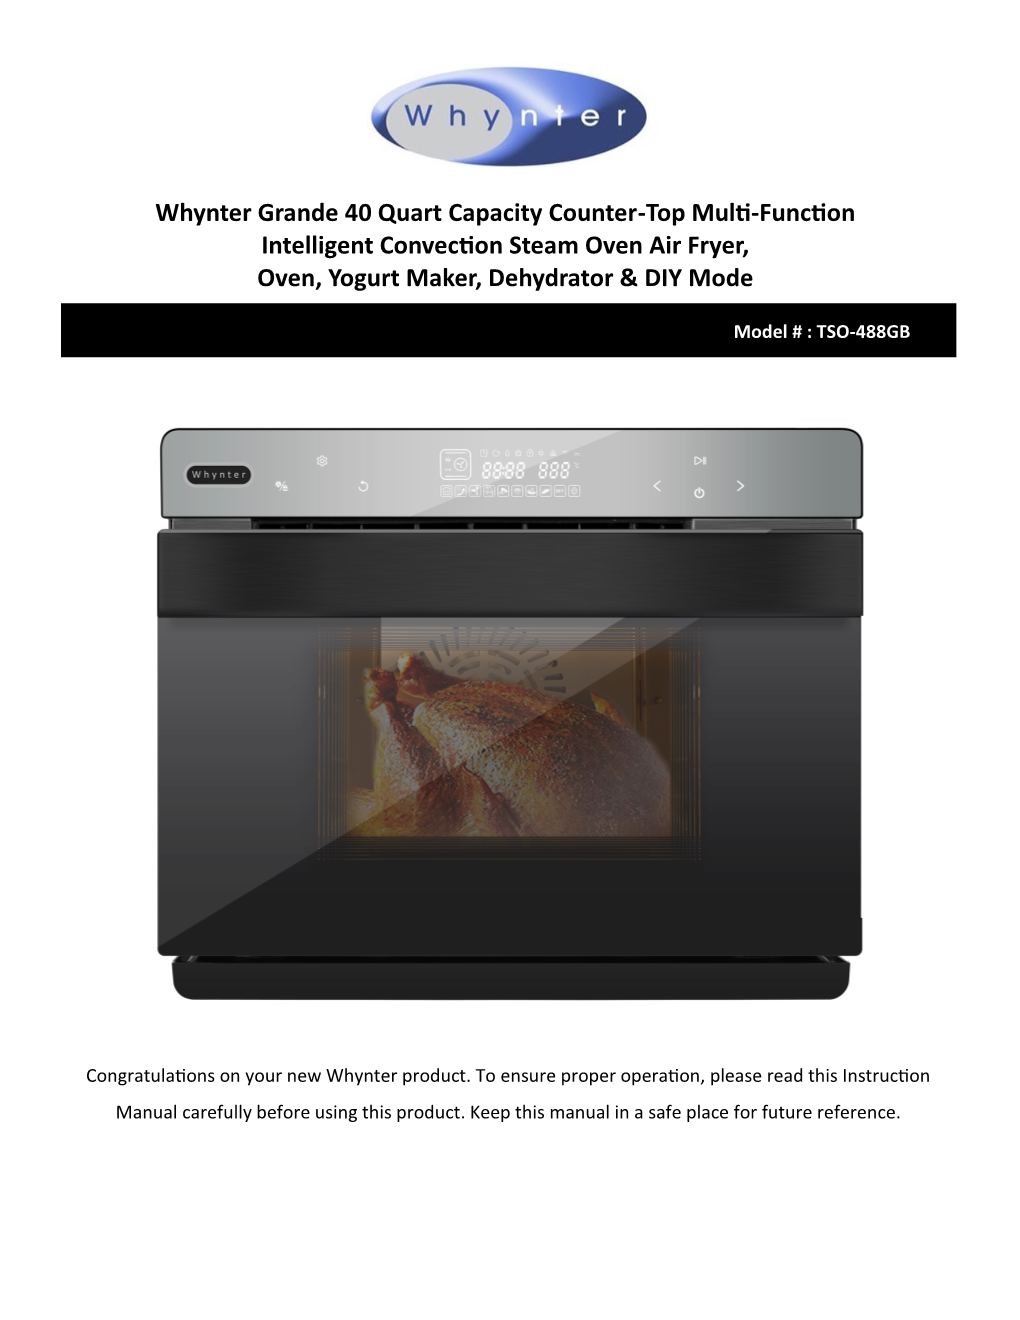 Whynter Grande 40 Quart Capacity Counter-Top Multi-Function Intelligent Convection Steam Oven Air Fryer, Oven, Yogurt Maker, Dehydrator & DIY Mode